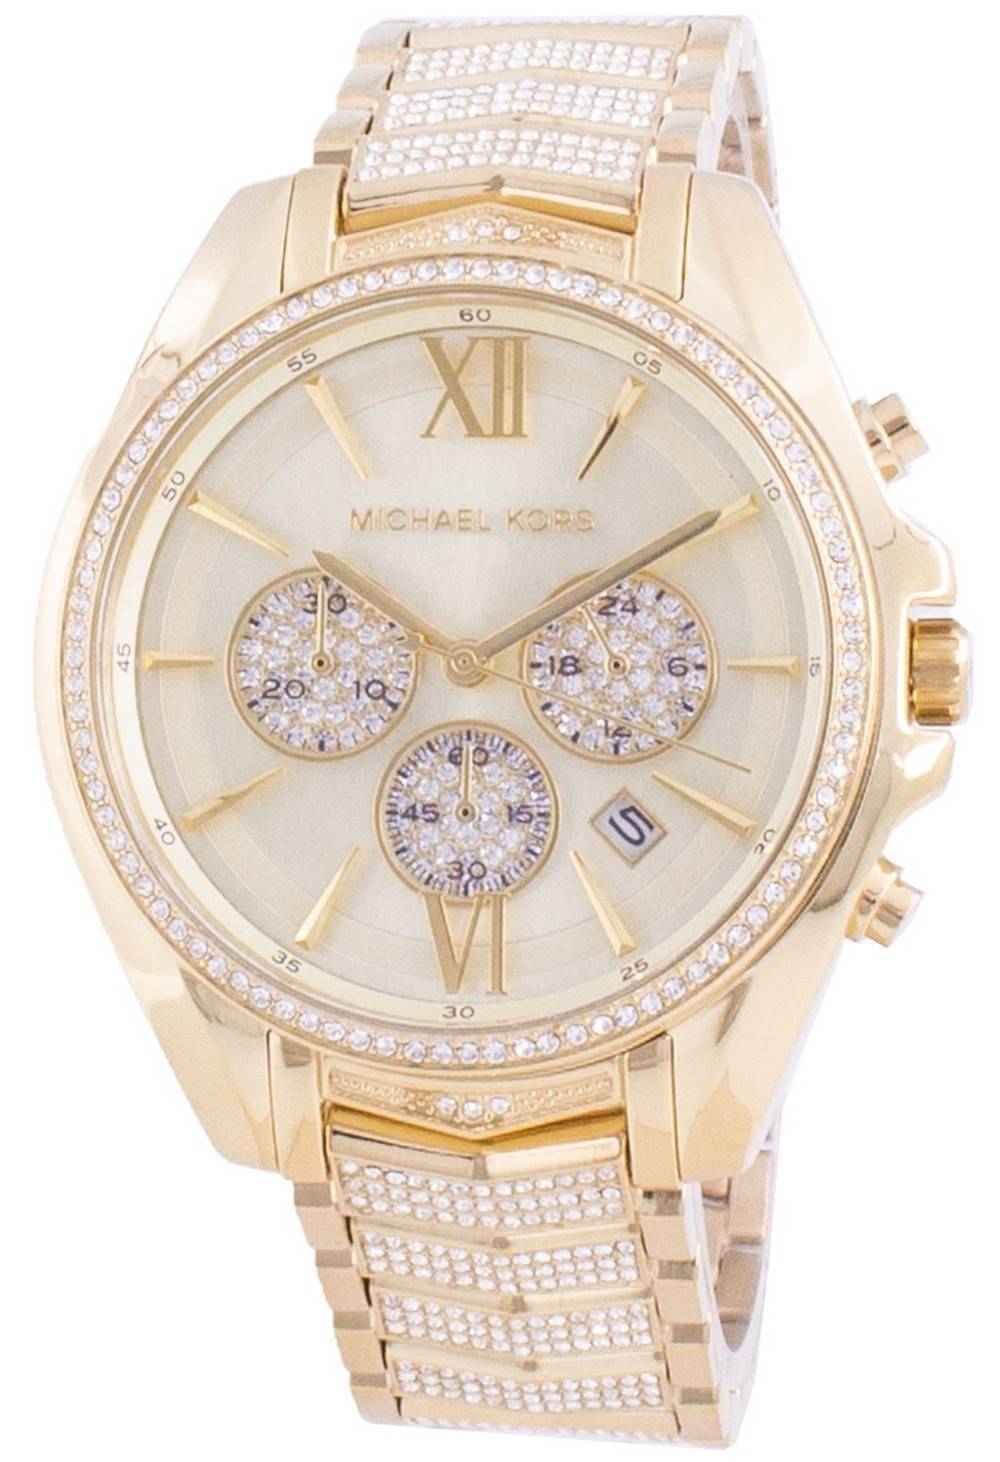 Michael Kors Whitney Chronograph Gold-Tone Ladies Watch, 55% OFF